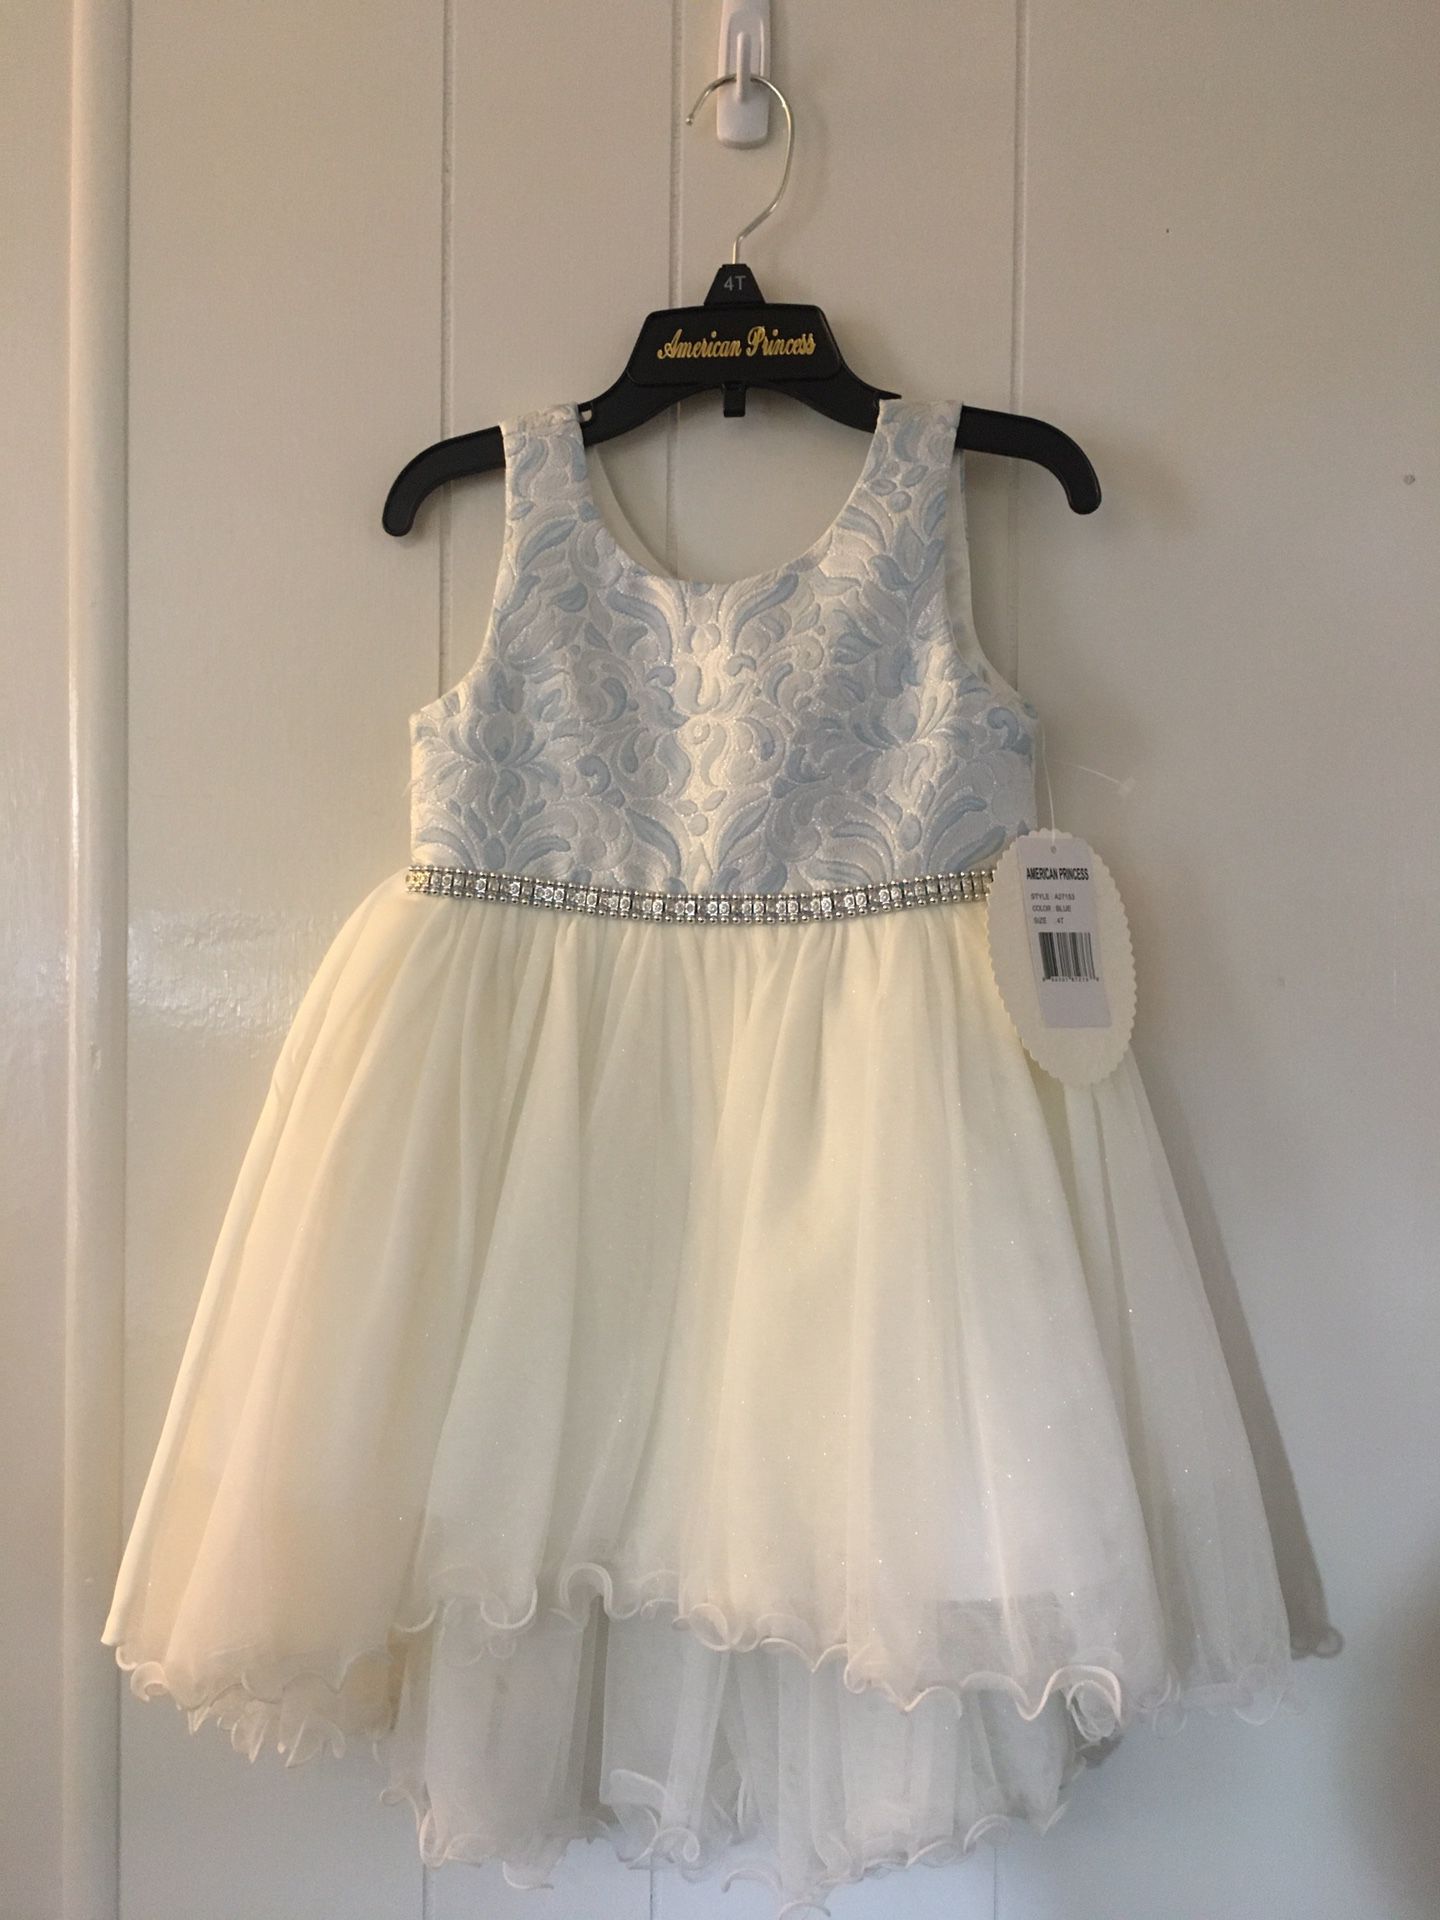 Dress size 4